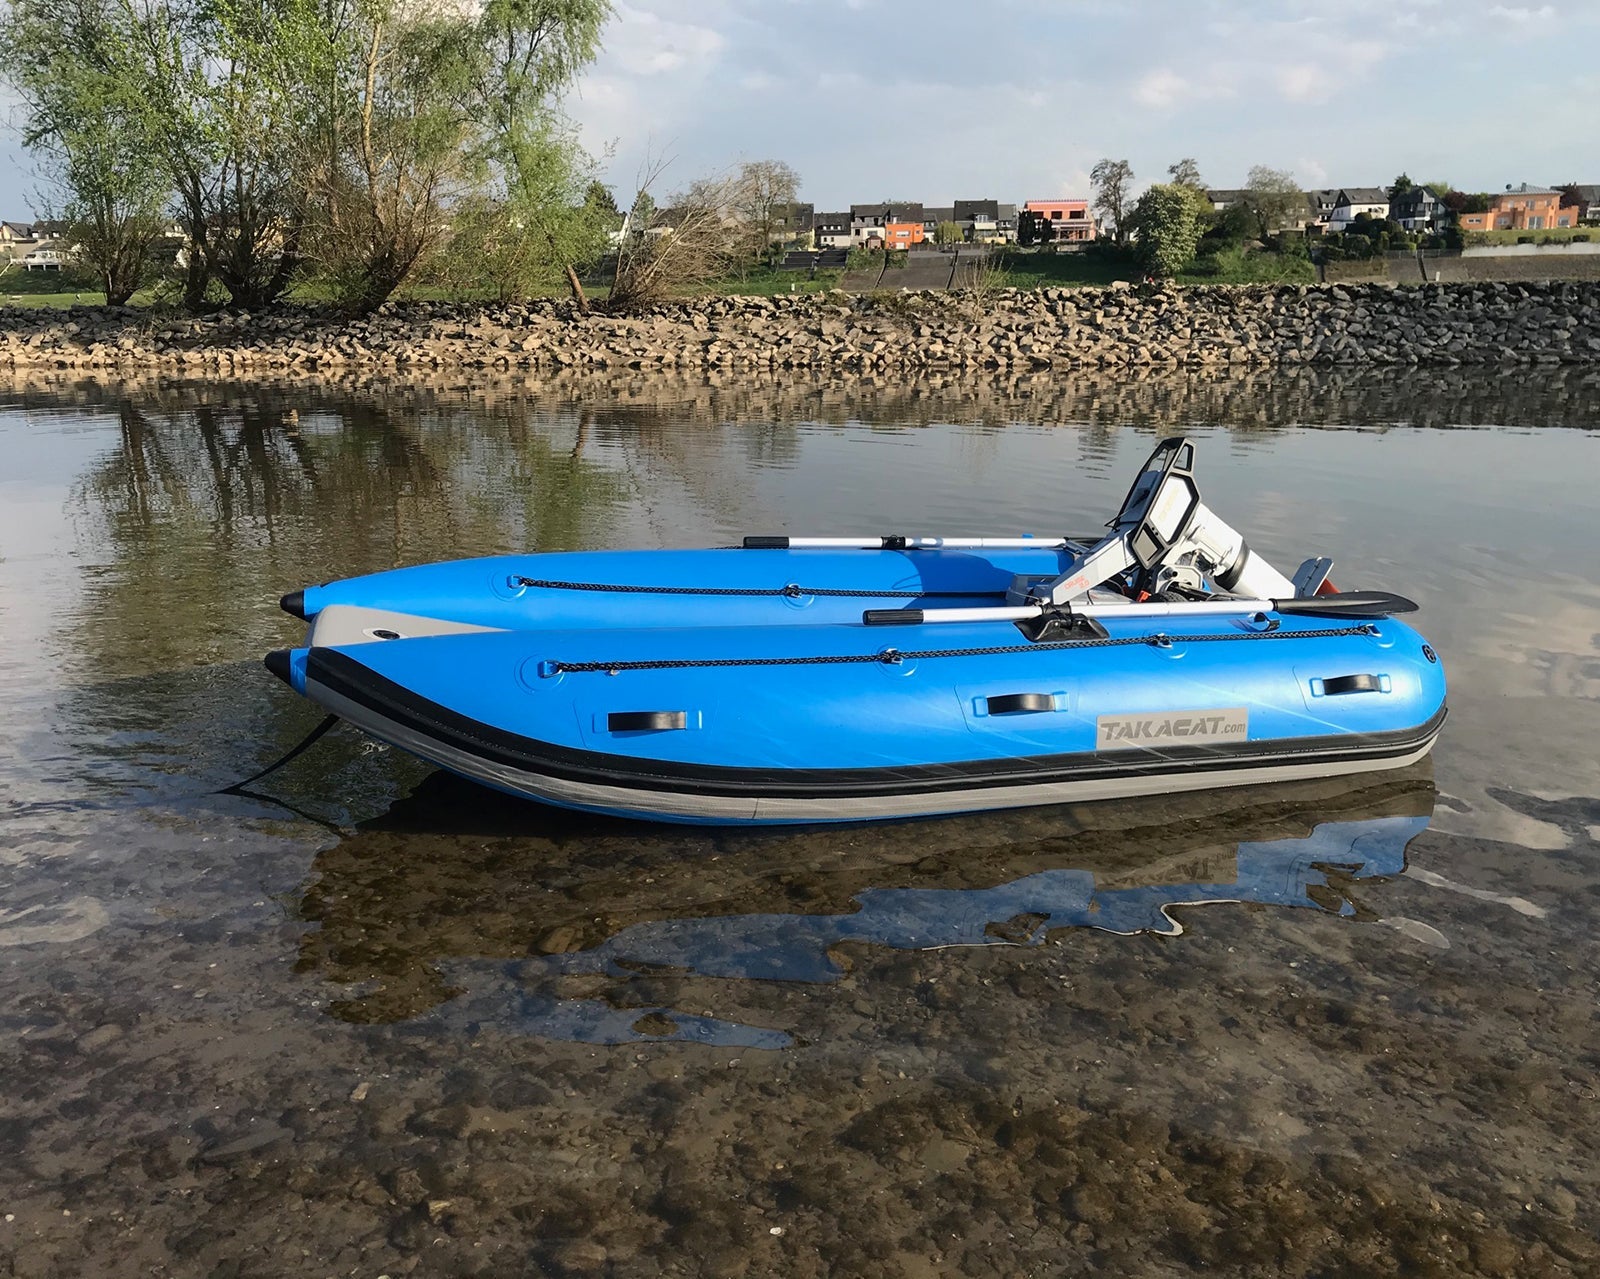 Takacat 380 LX Inflatable Catamaran